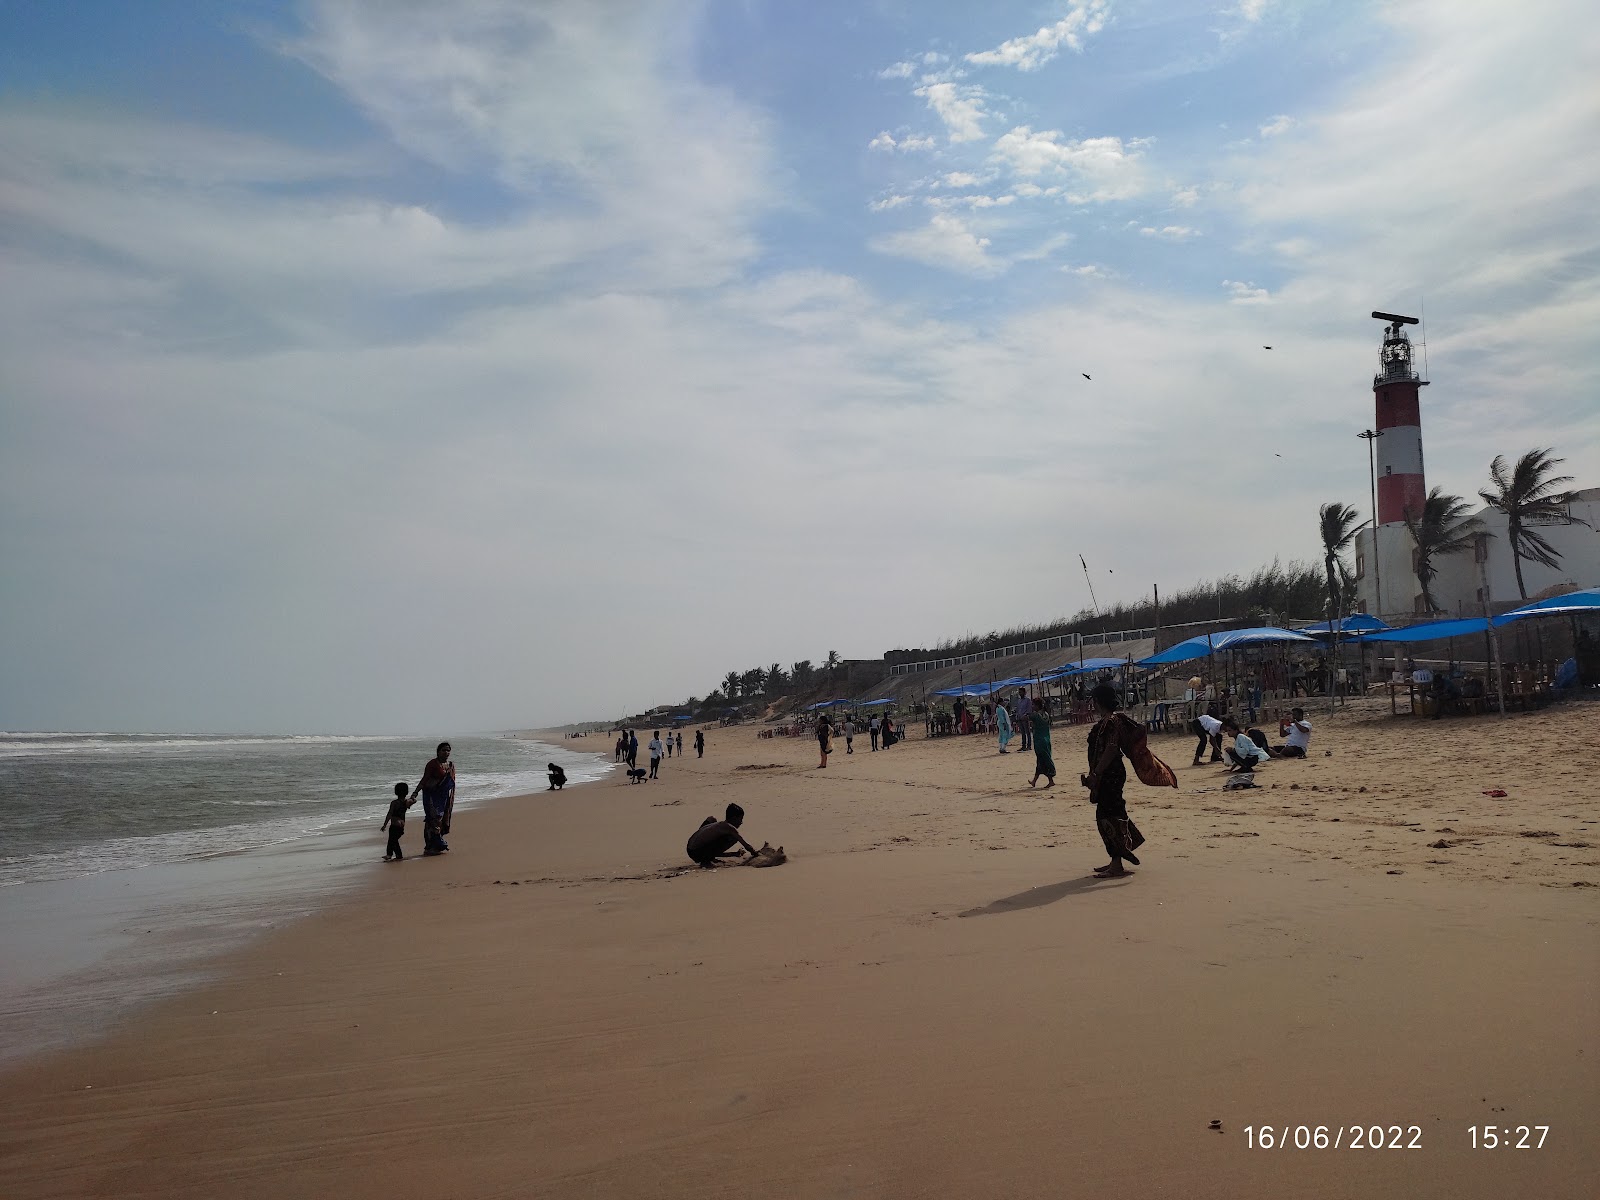 Fotografie cu Gopalpur Beach - locul popular printre cunoscătorii de relaxare